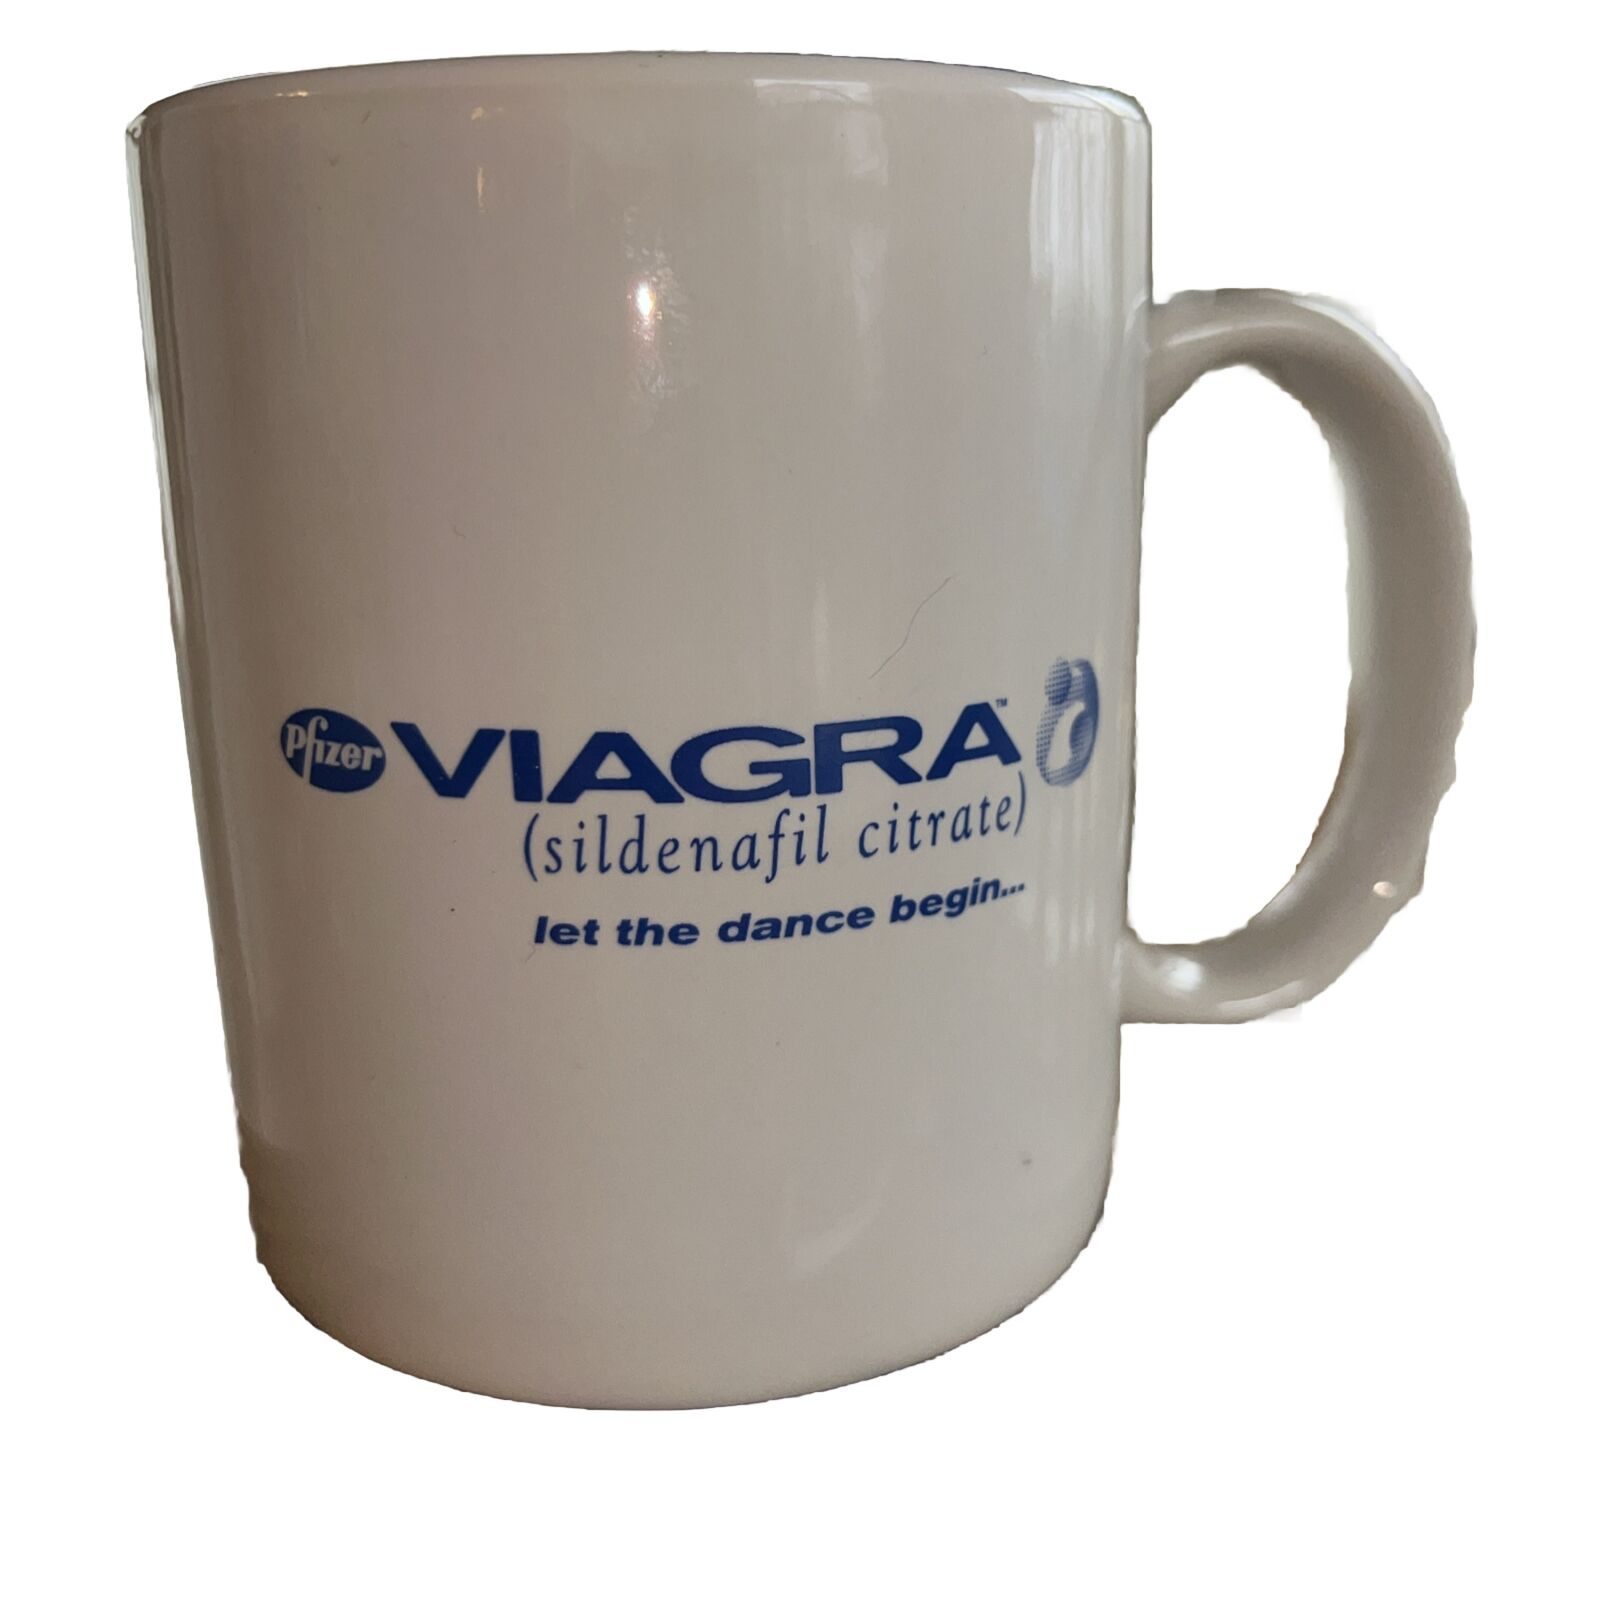 Viagra Mug For Coffee Or Tea Novelty Fun gift Gag gift conversation Starter